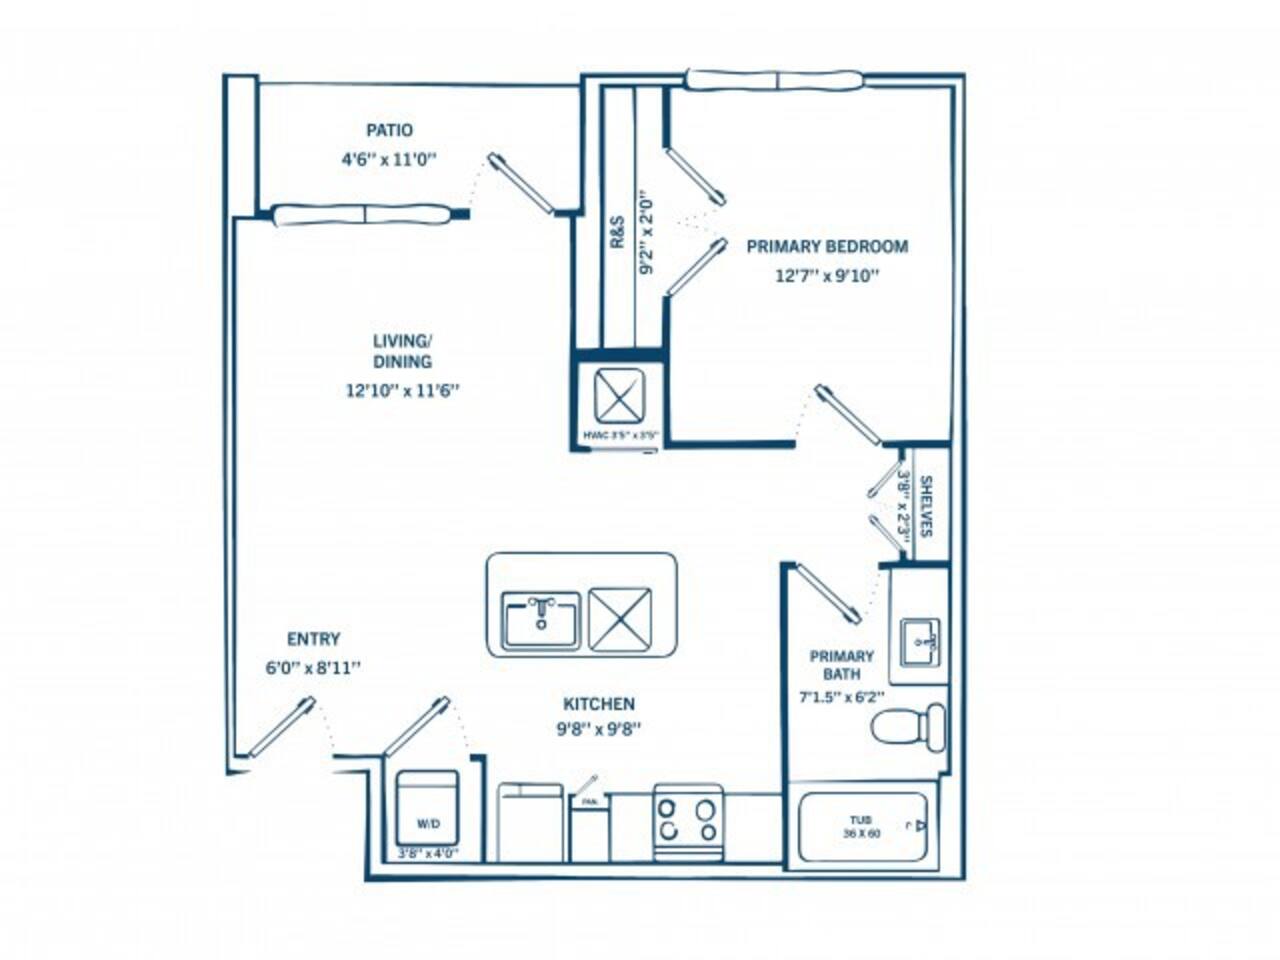 Floorplan diagram for E2C, showing 1 bedroom